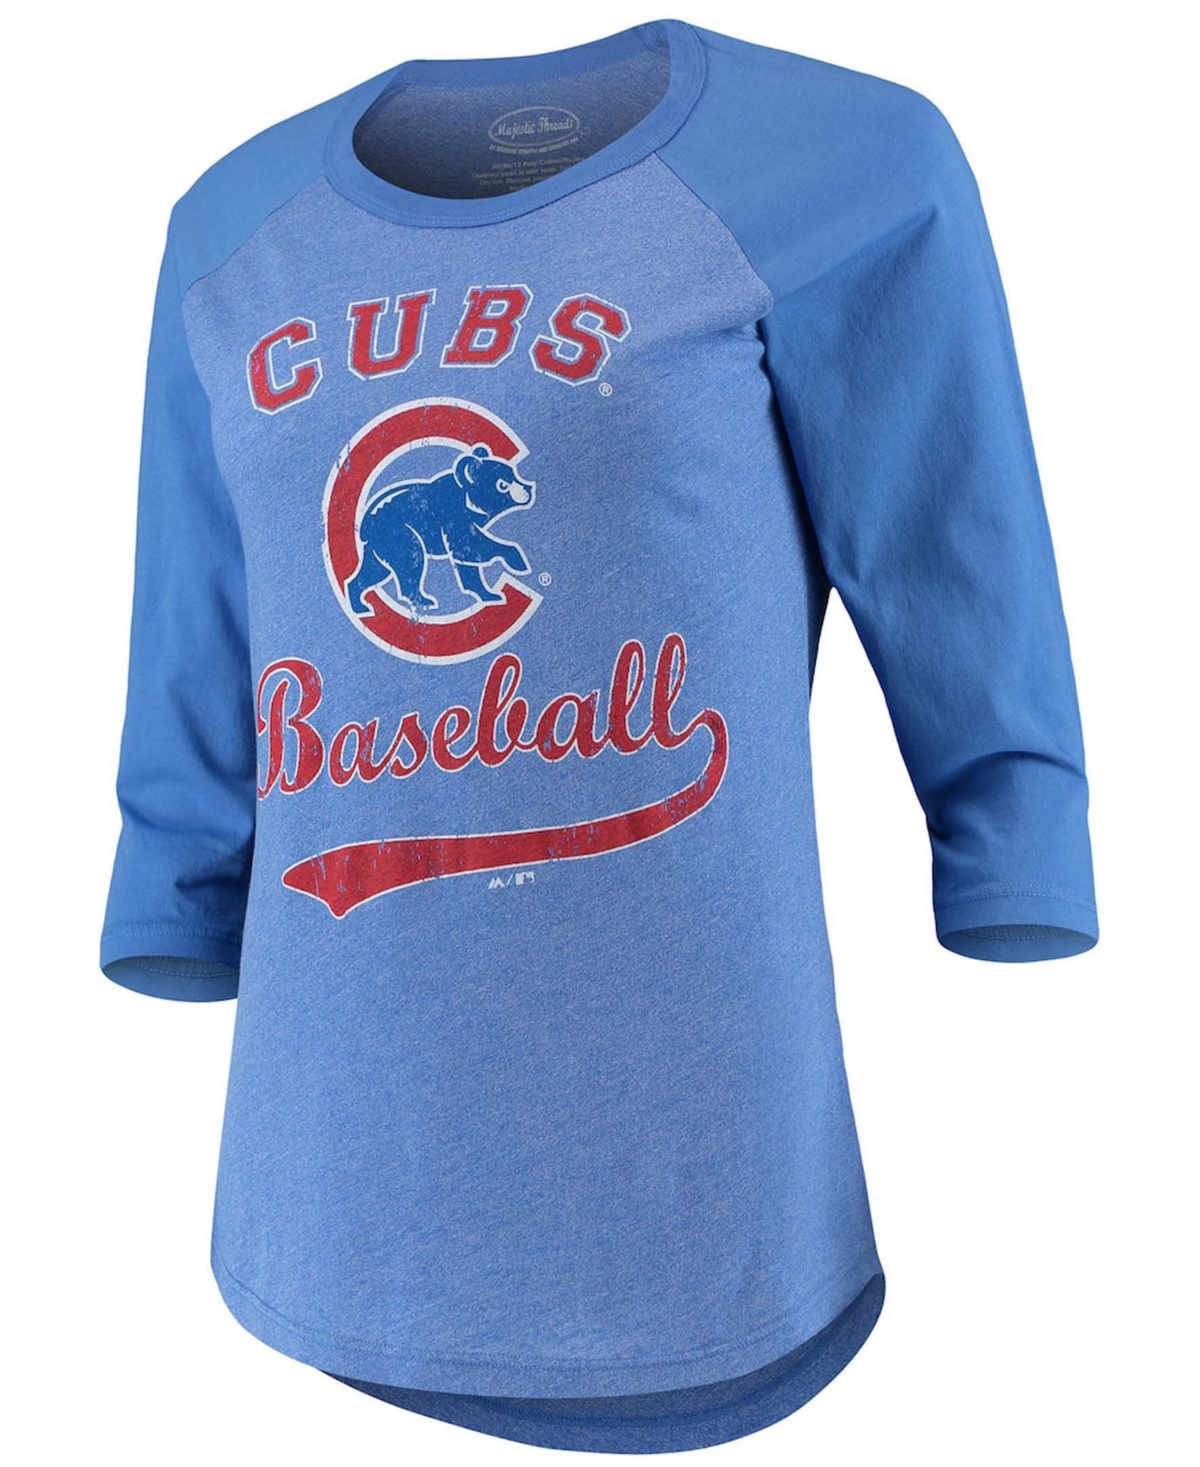 Women's Royal Chicago Cubs Team Baseball Three-Quarter Raglan Sleeve Tri-Blend T-shirt - Royal